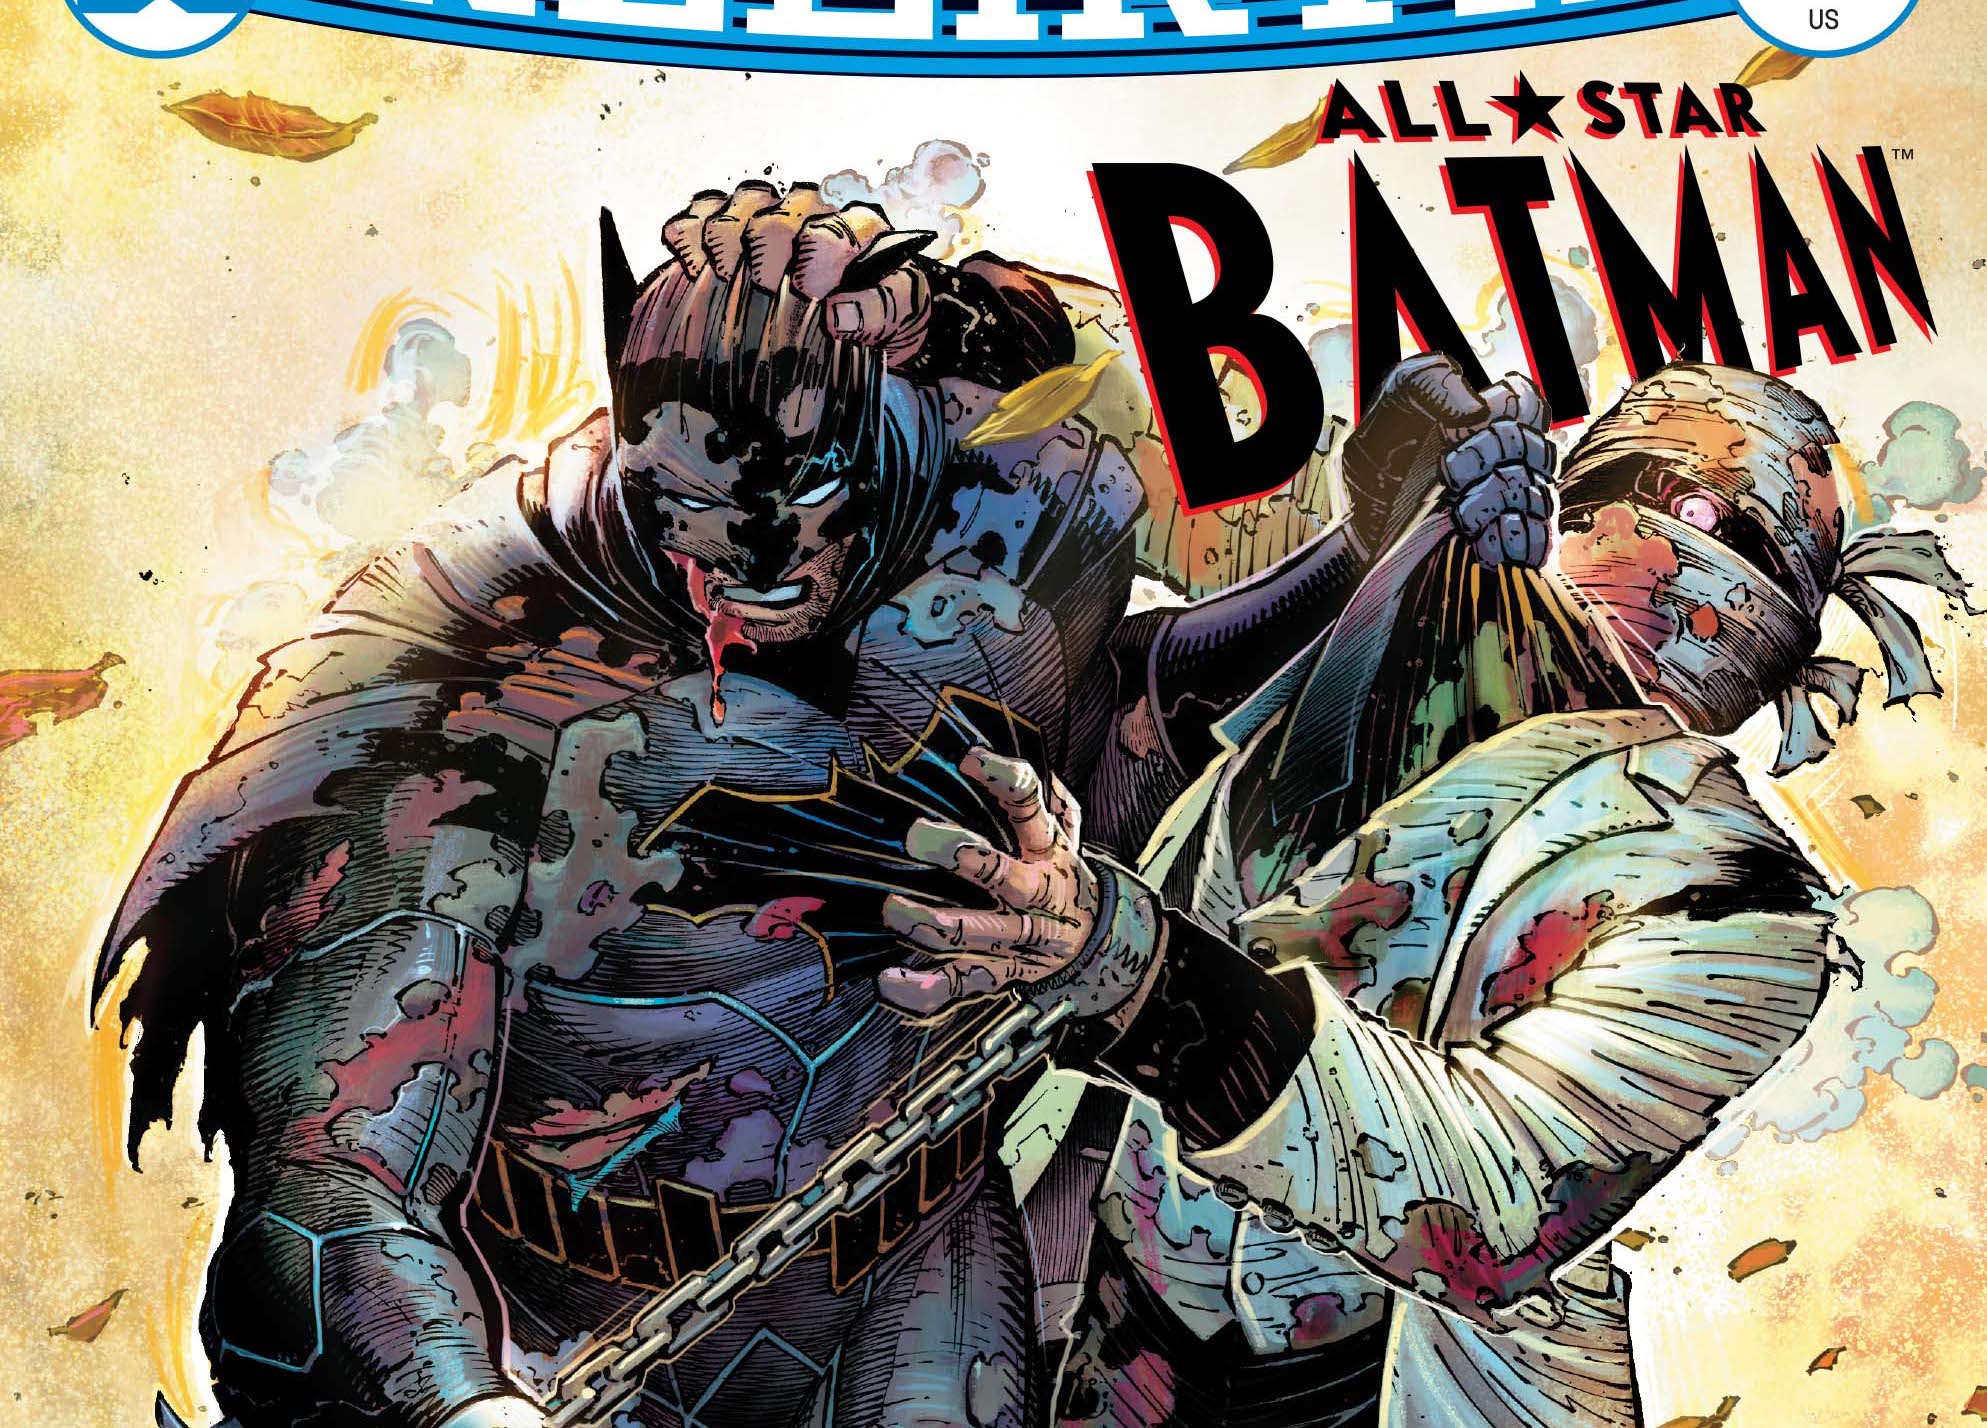 All-Star Batman #2 Review